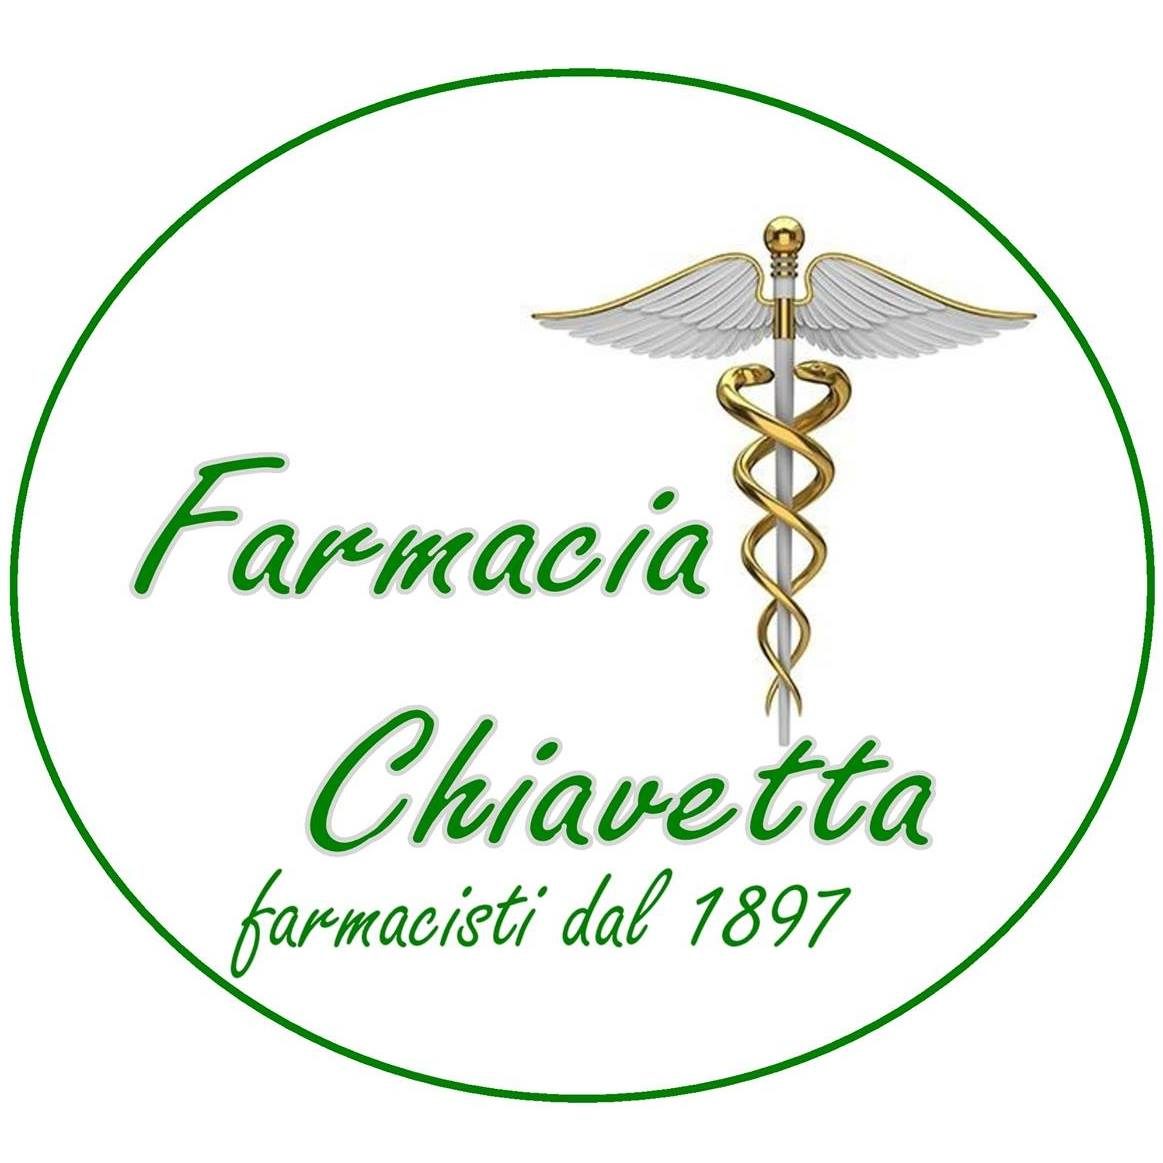 Farmacia Chiavetta